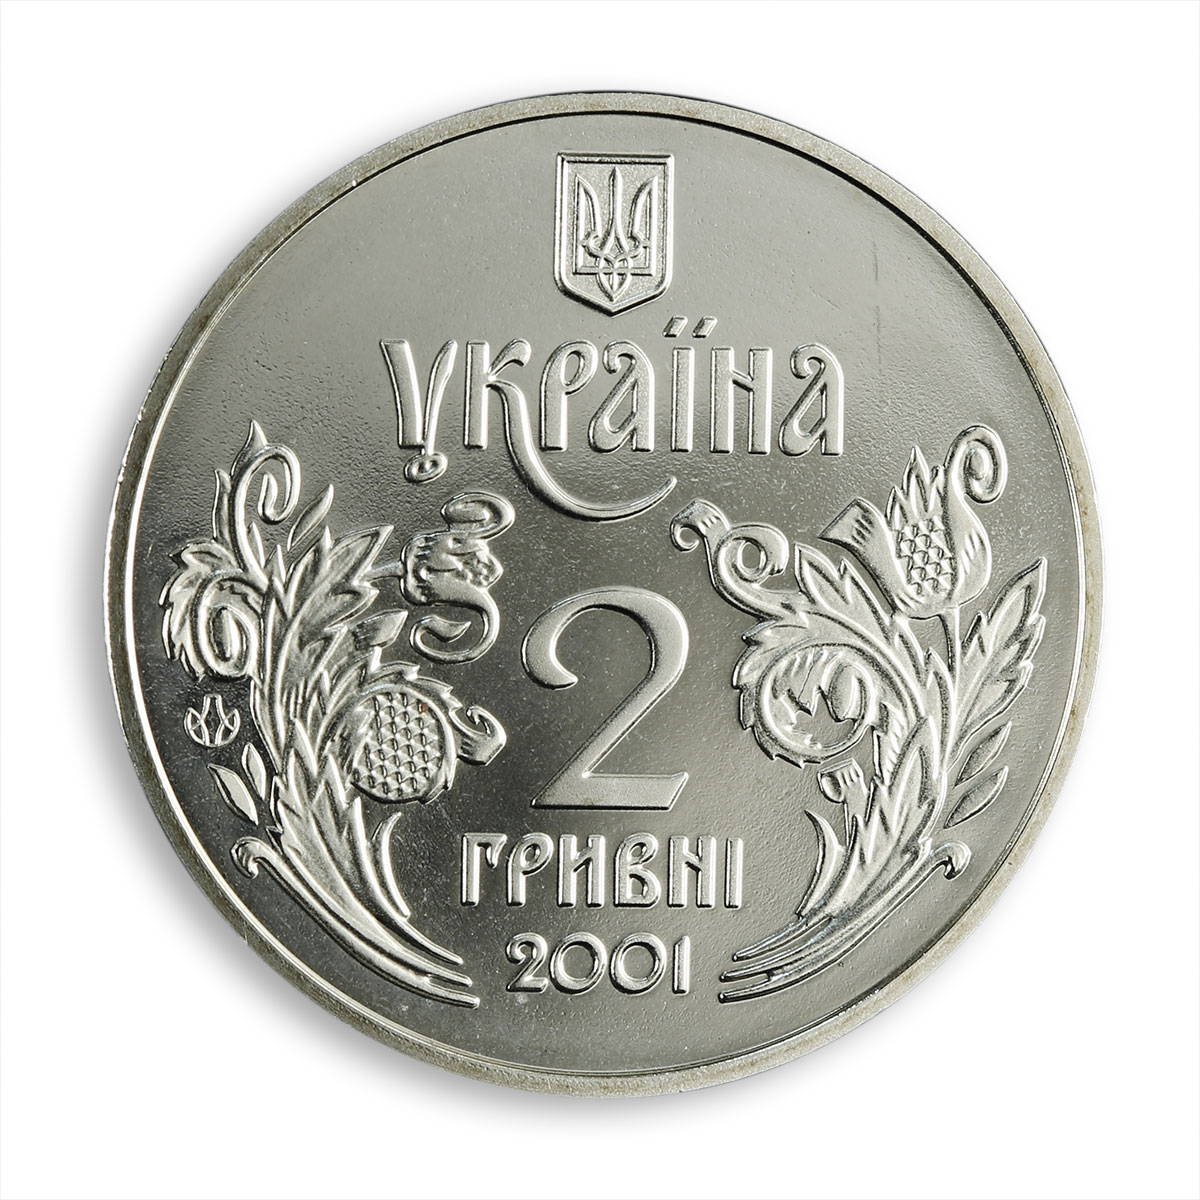 Ukraine 2 hryvnia 5 years of Ukrainian Constitution law rare nickel coin 2001